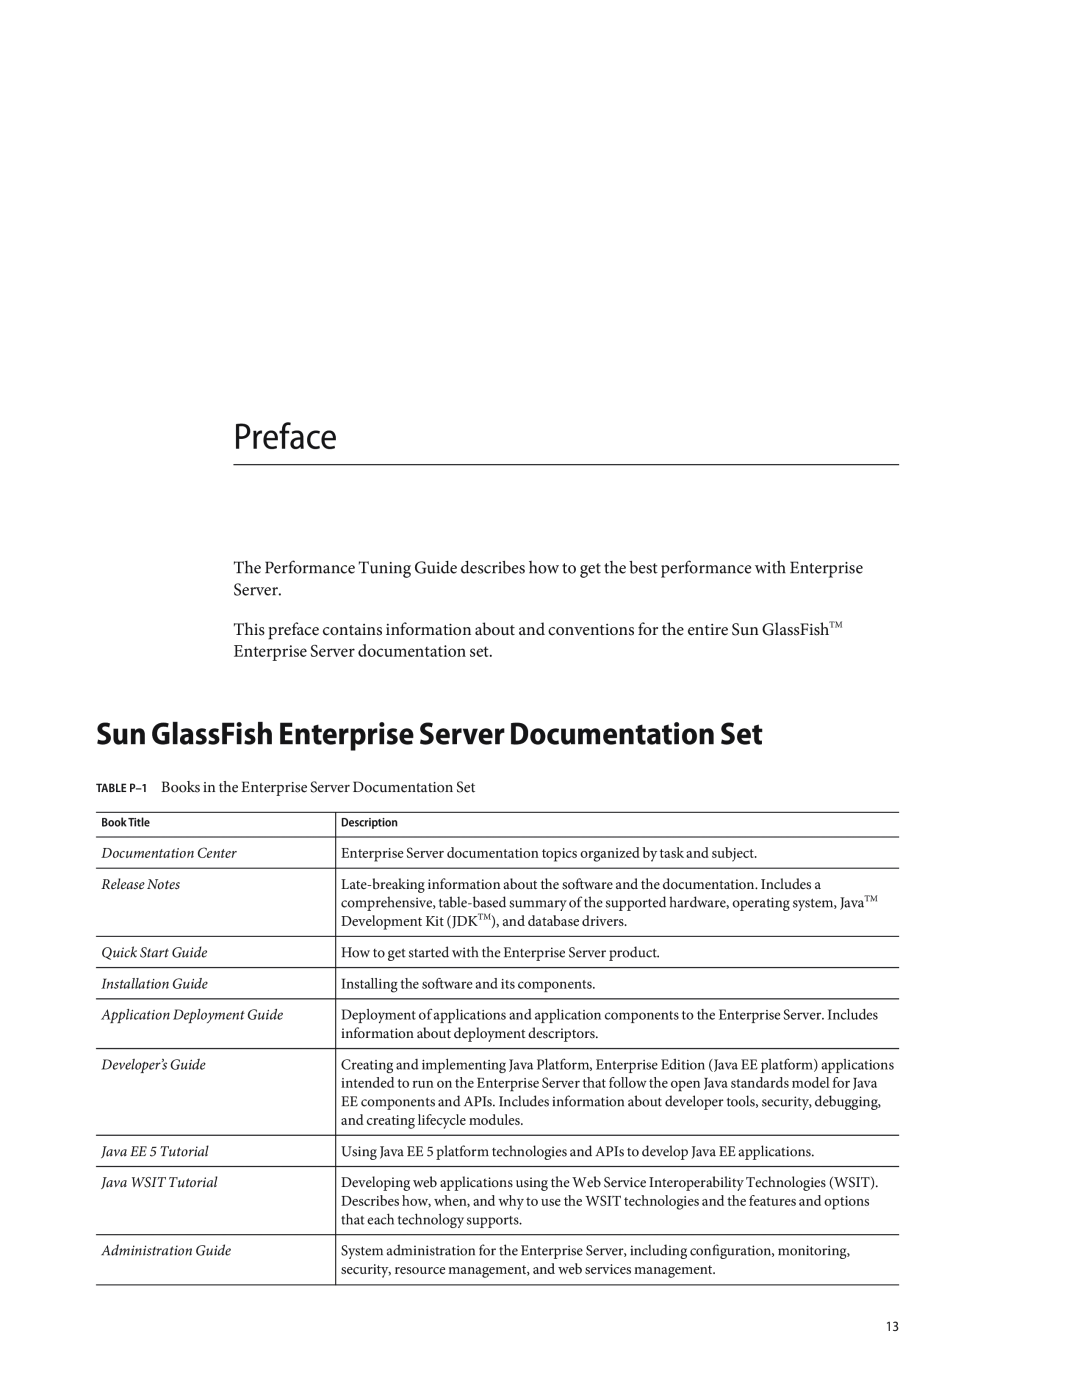 Sun Microsystems 820434310 manual Preface, Sun GlassFish Enterprise Server Documentation Set 